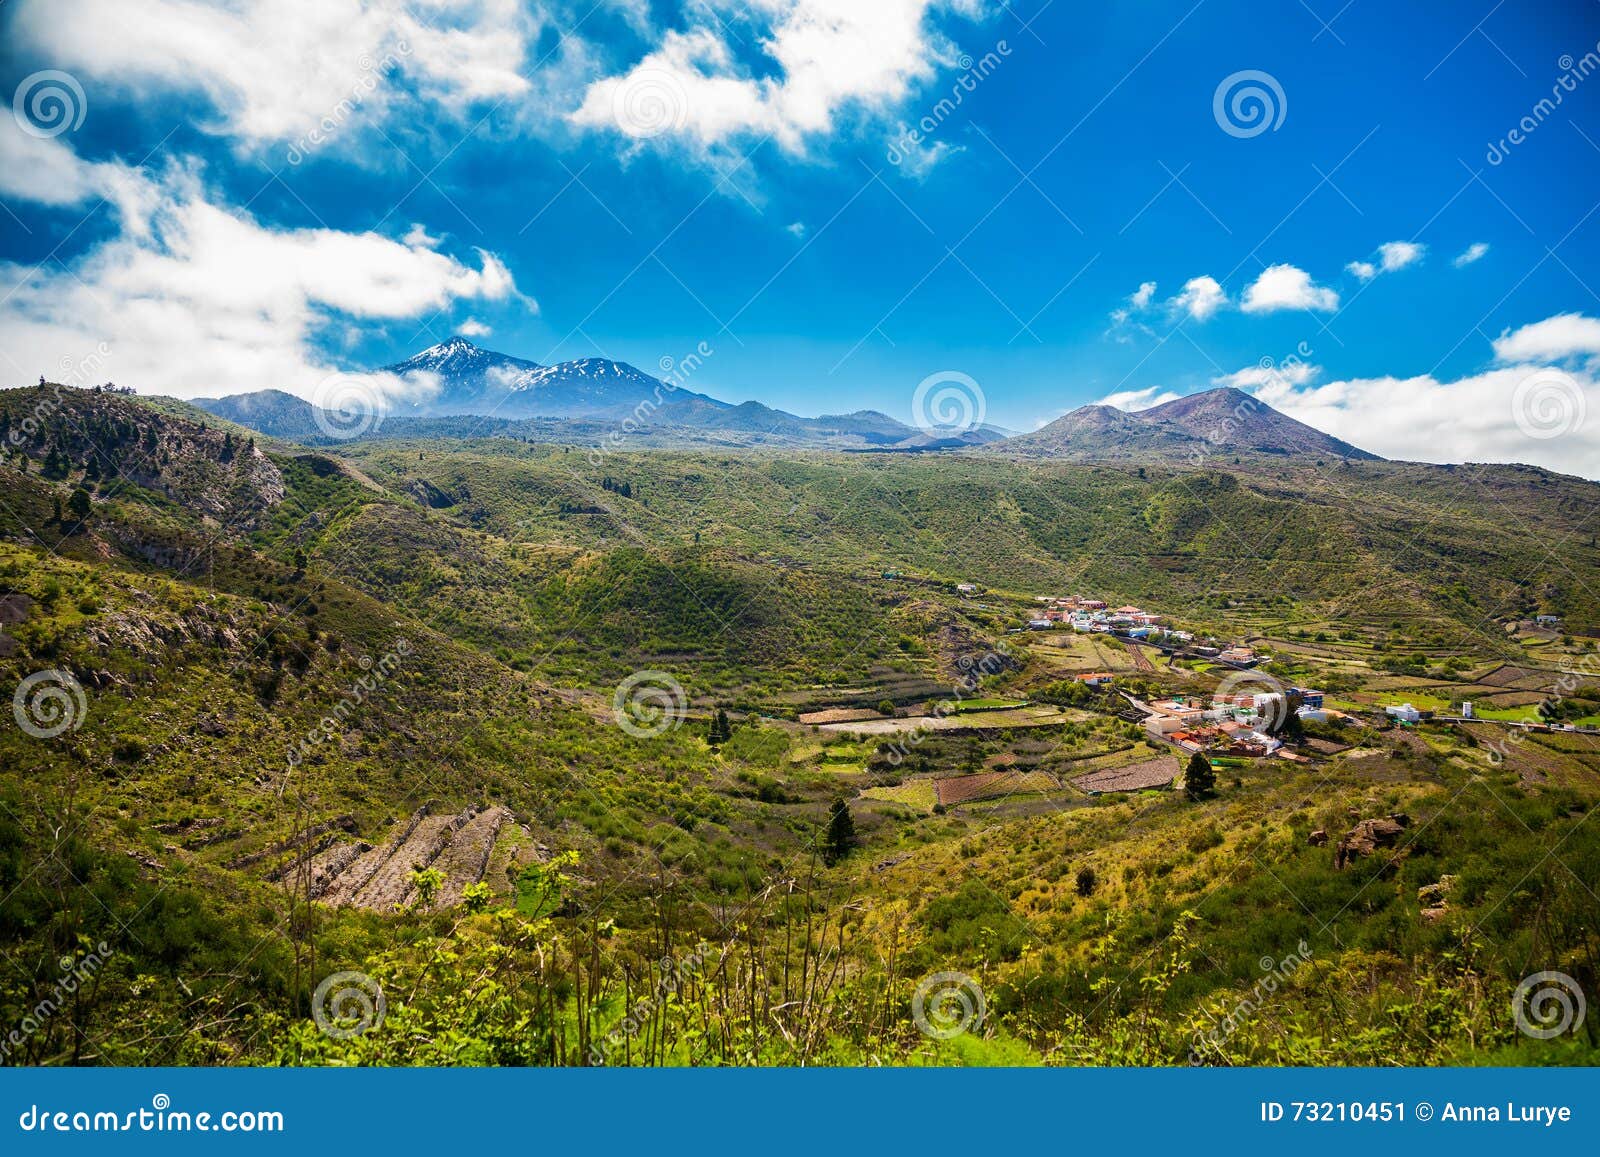 panoramic view of valle de arriba